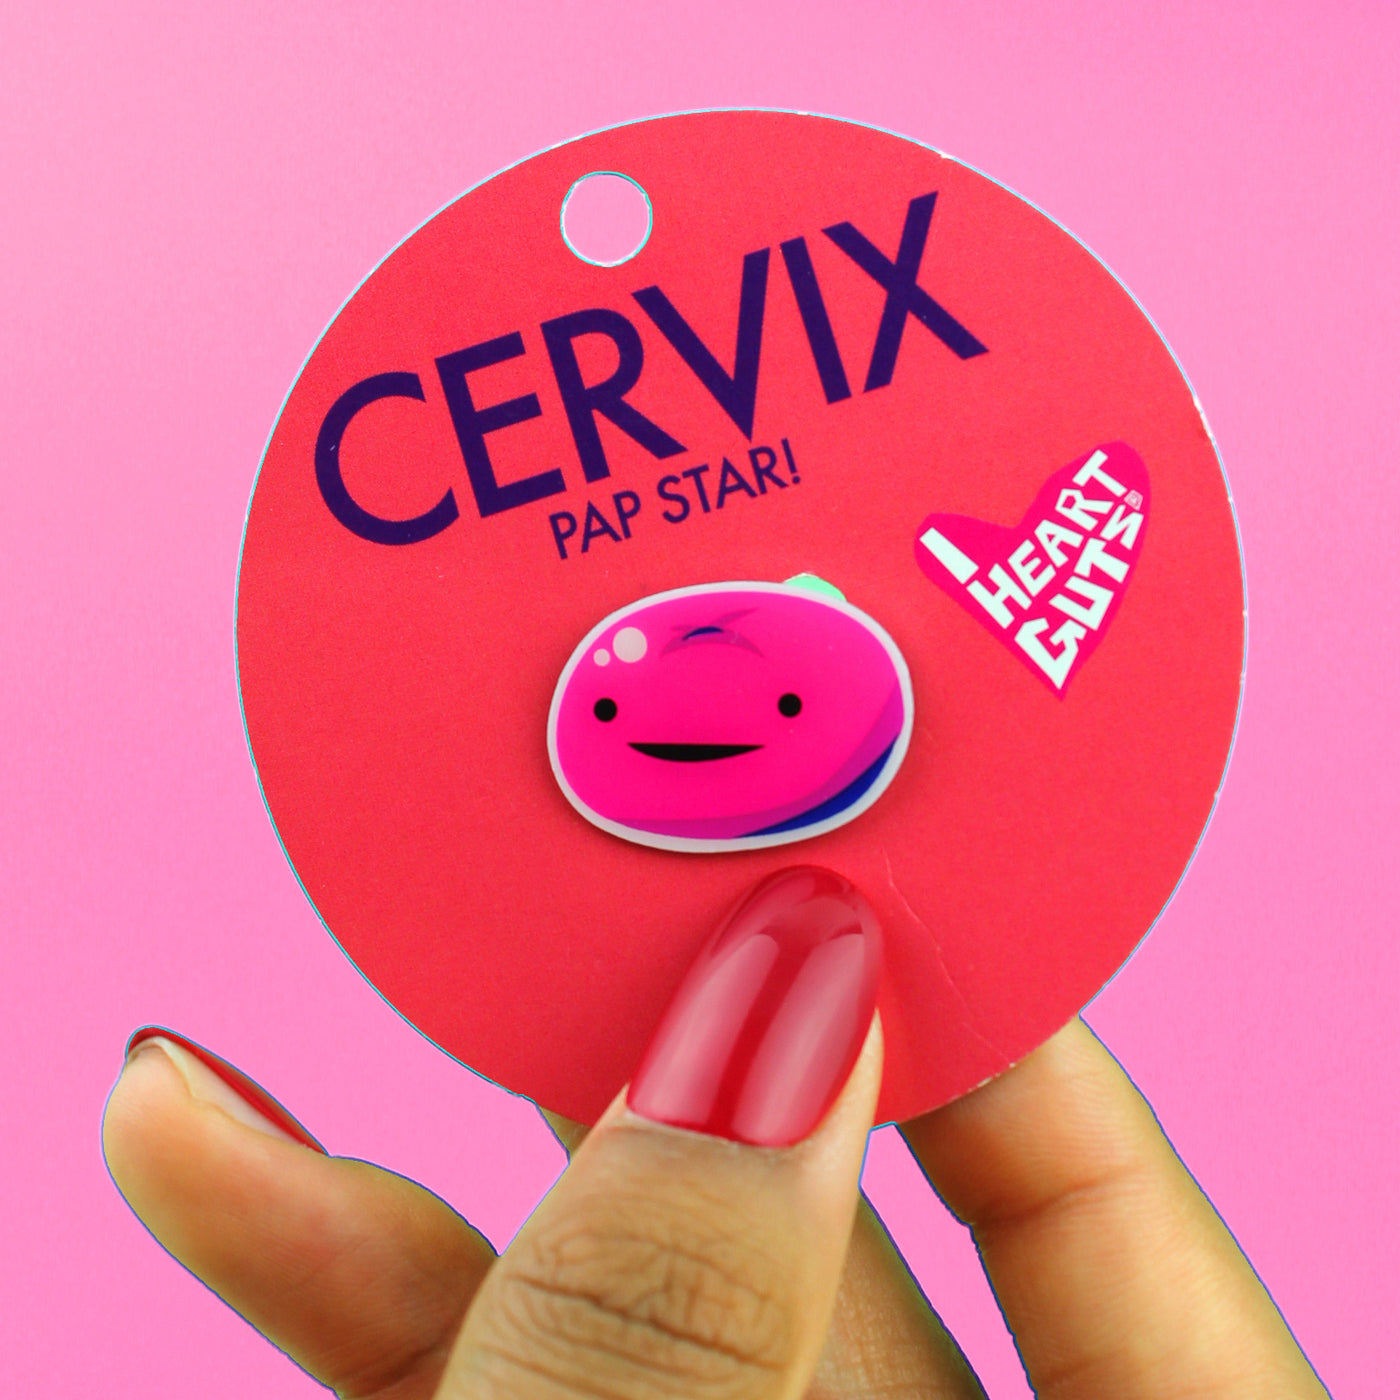 Cervix Lapel Pin - Pap Star - I Heart Guts